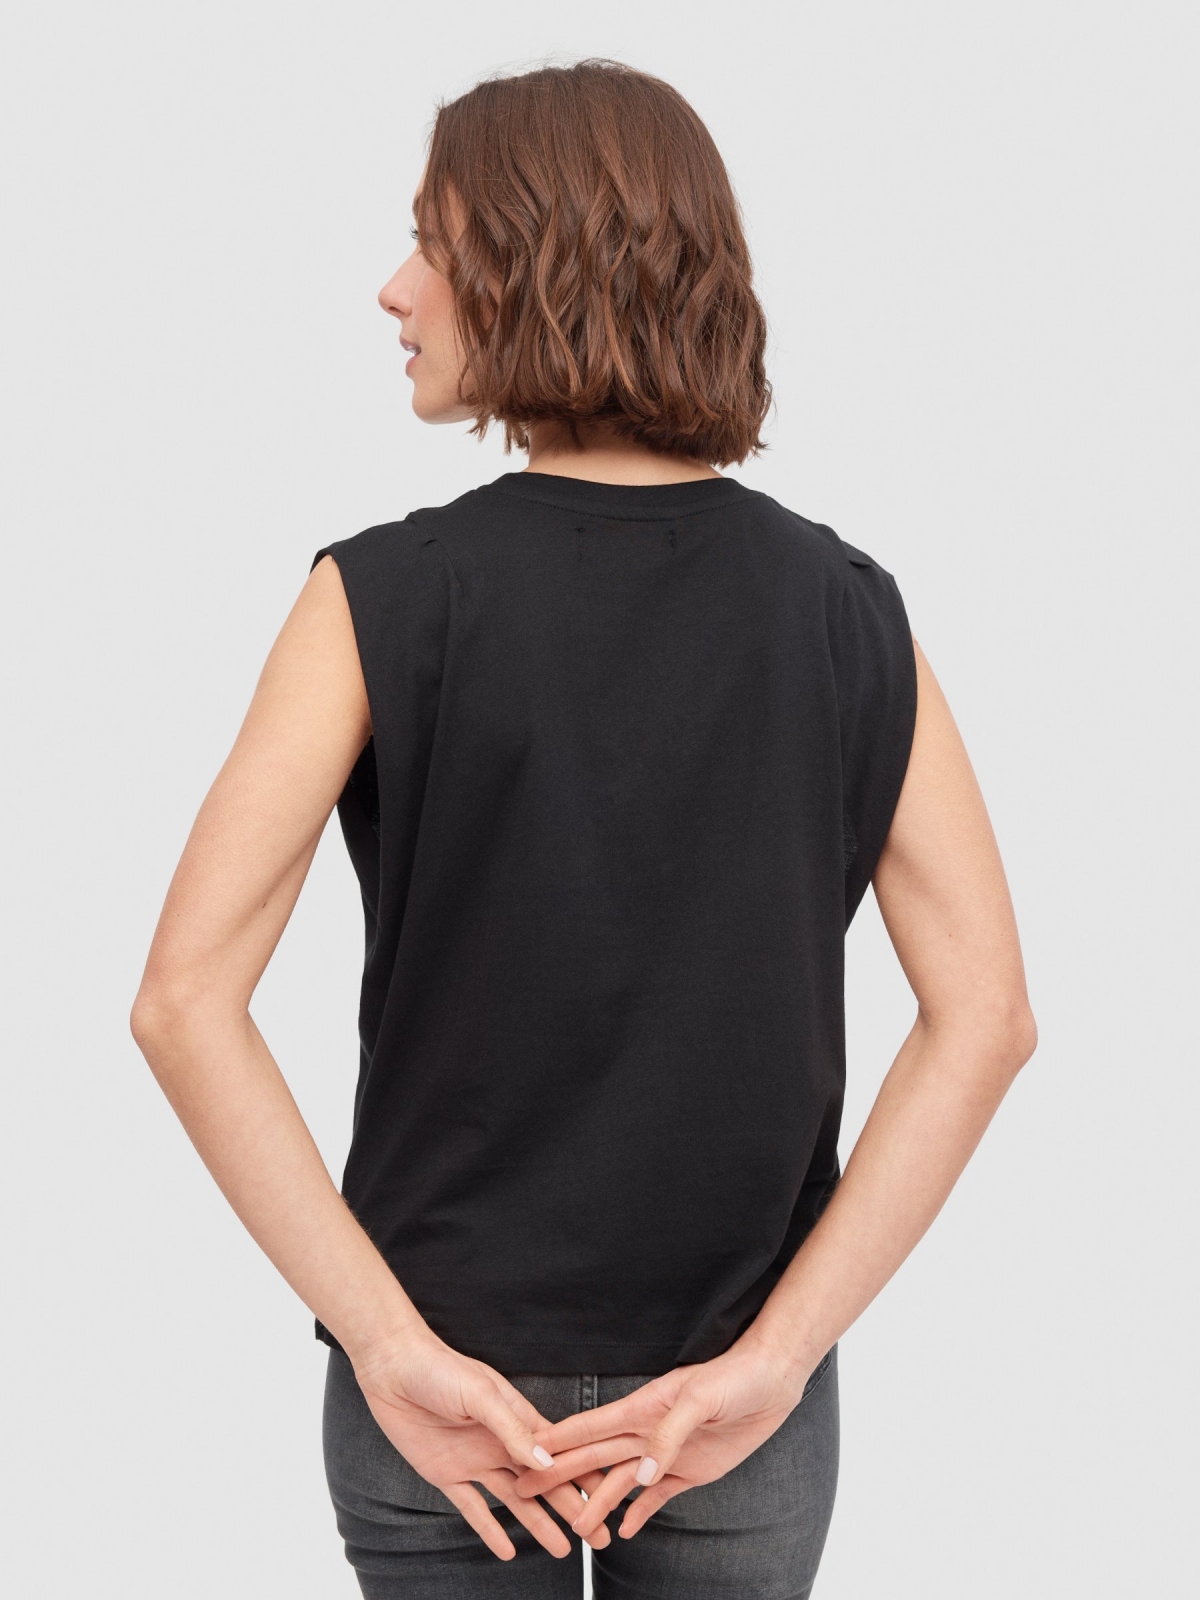 Camiseta sin mangas mariposa negro vista media trasera